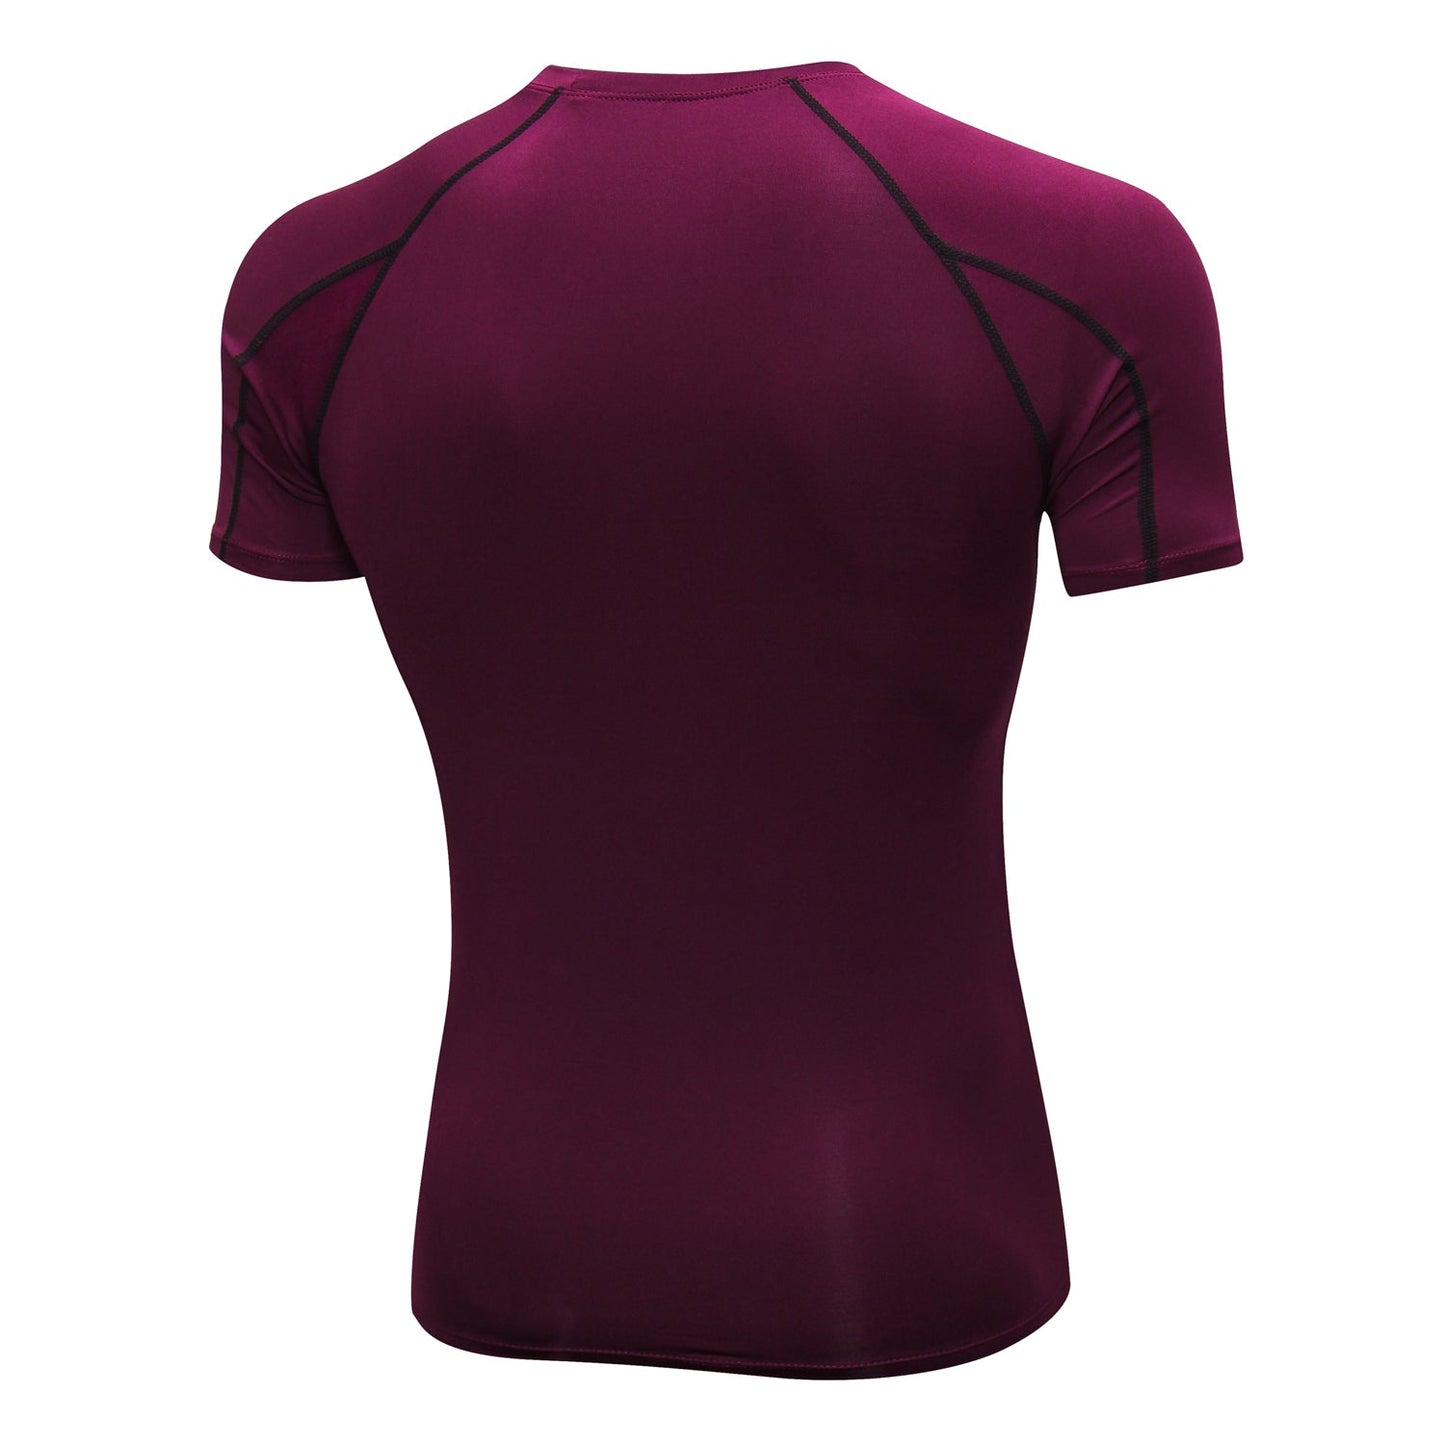 Mens Short Sleeve Compression Workout T-shirt Cool Dry Baselayer Athletic Sports Shirts Active Tops Gym Running Shirt LANBAOSI